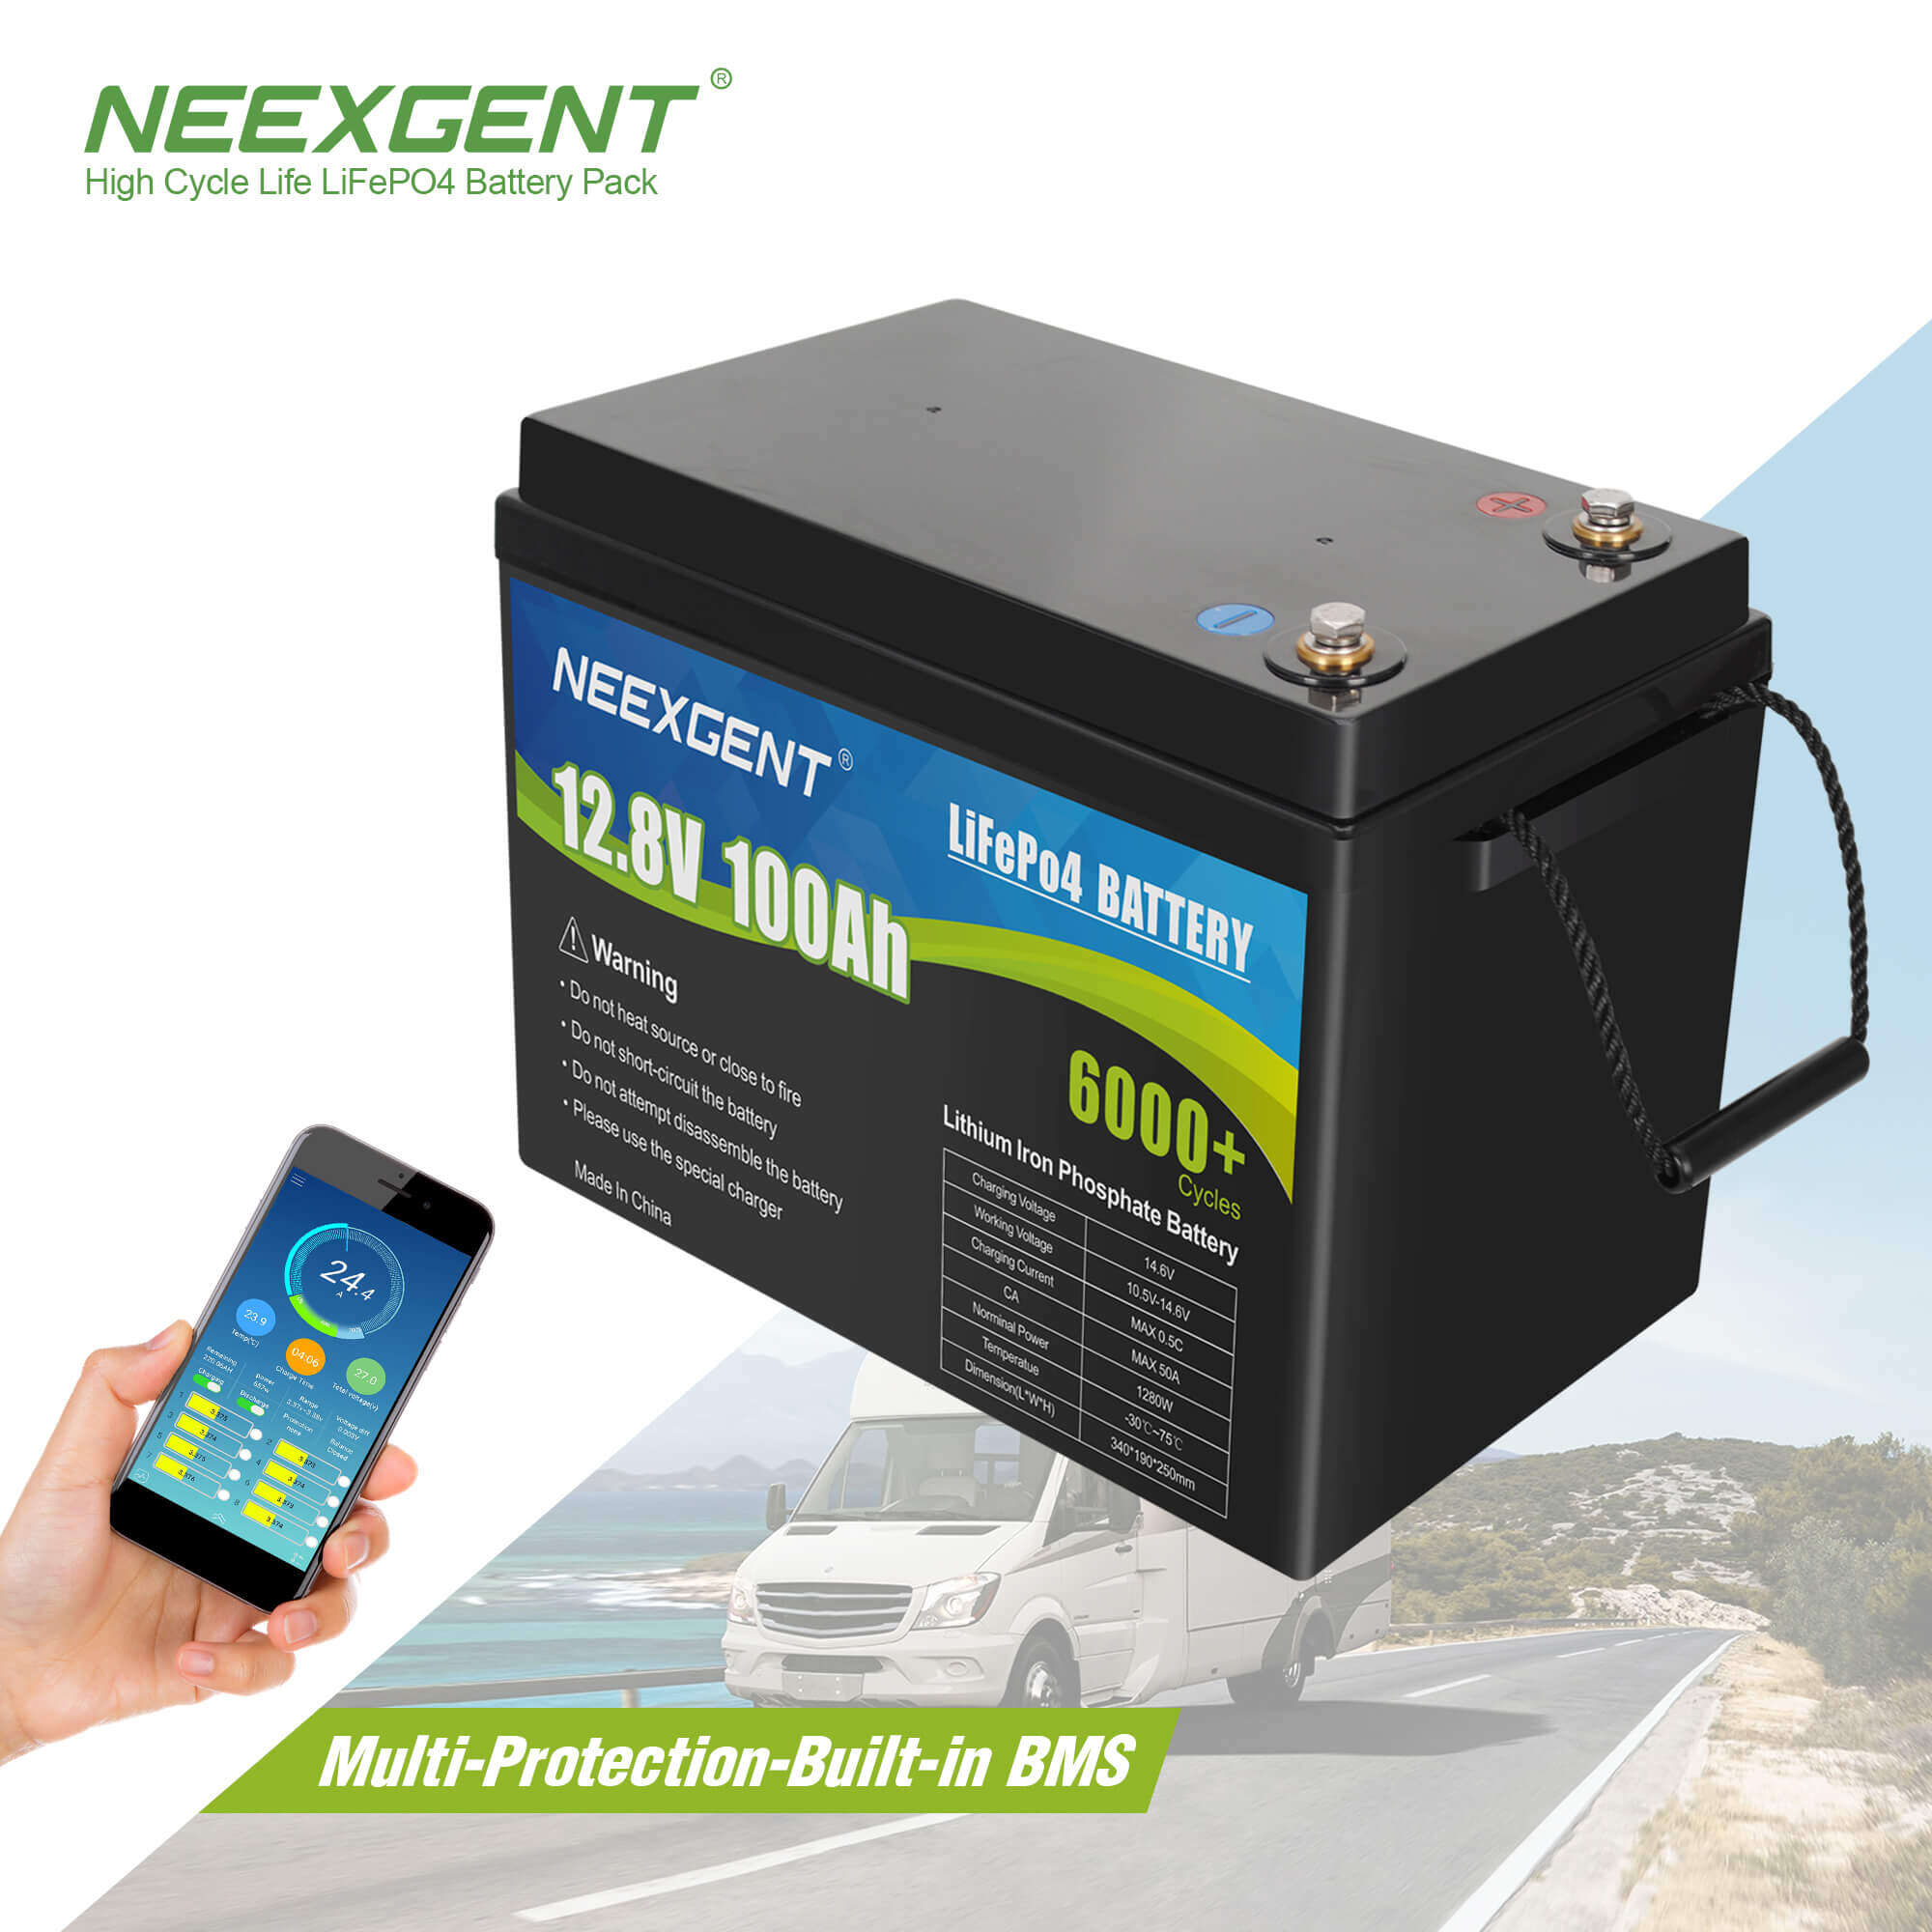 Neexgent Solar Bateria Lifepo4 Battery 12.8v 100ah Lifepo4 Battery Pack With Bms